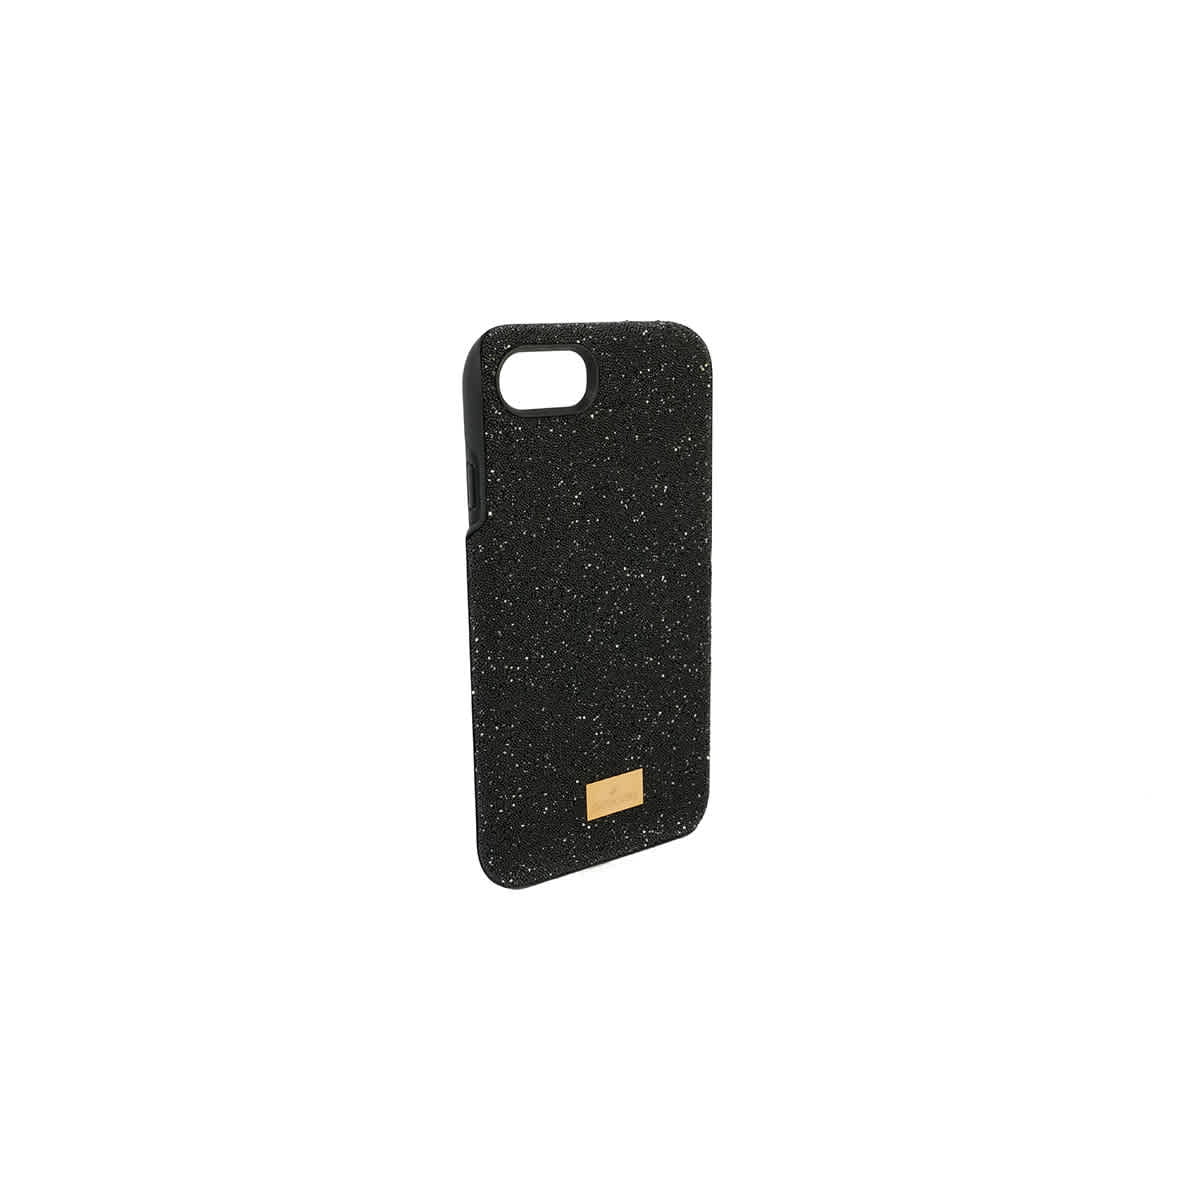 Swarovski Black High Smartphone Iphone 7 Case With Bumper -